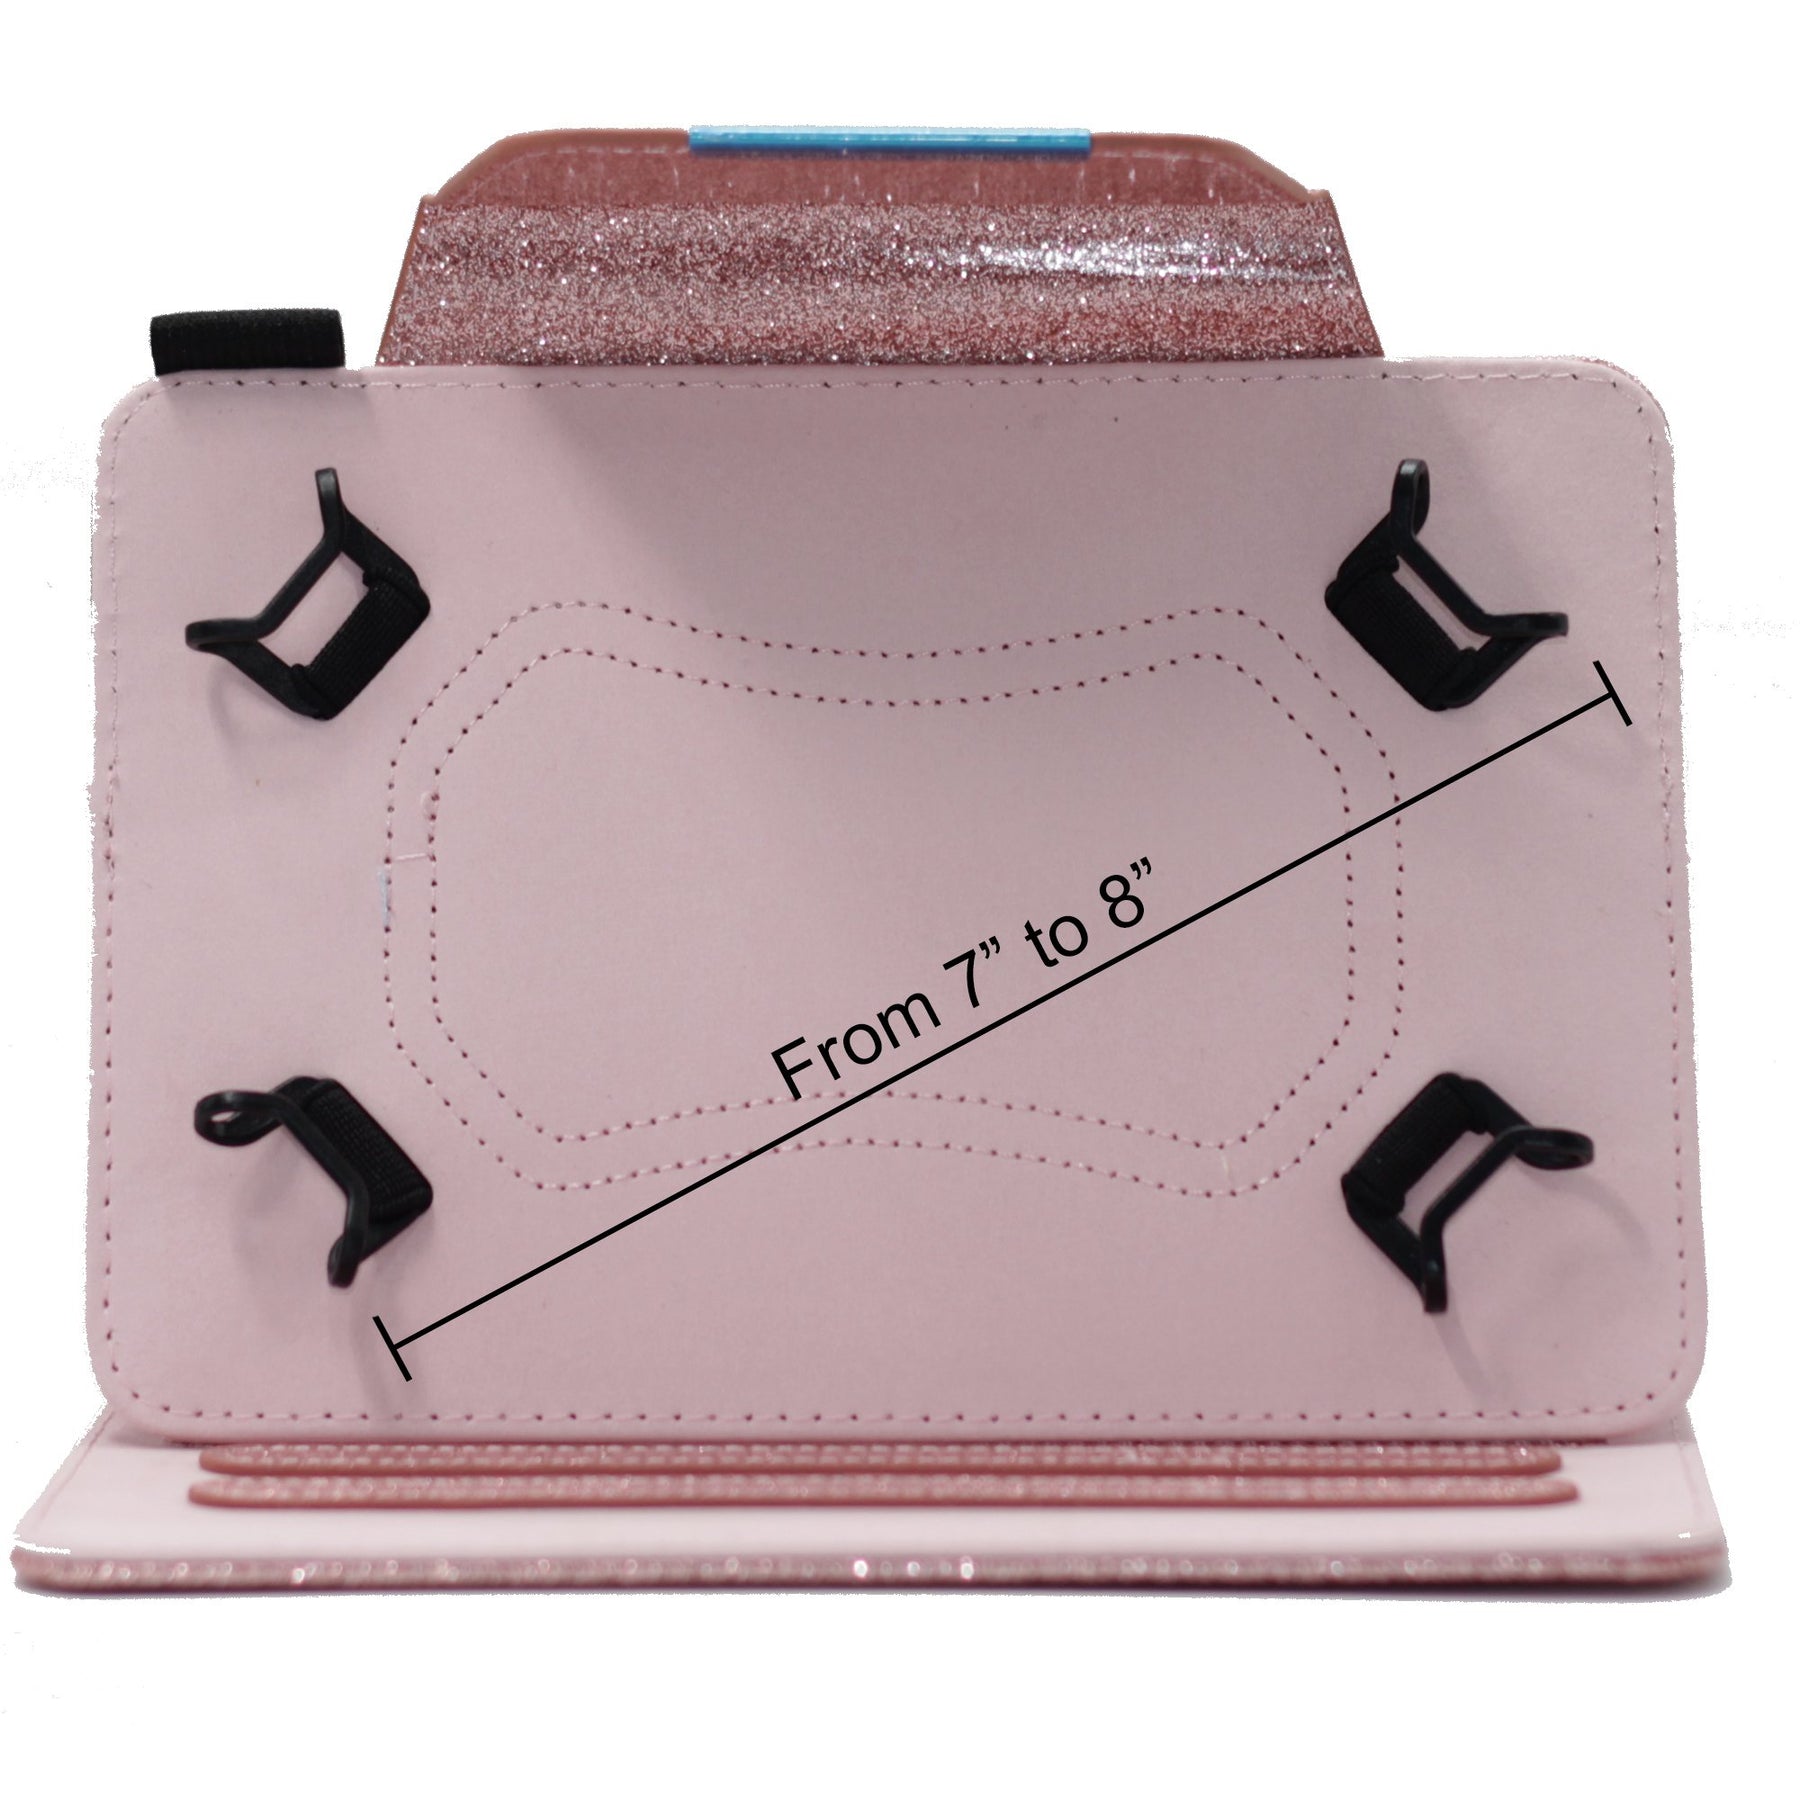 Universal Tablet Case 7 inch Case Case Color Pink